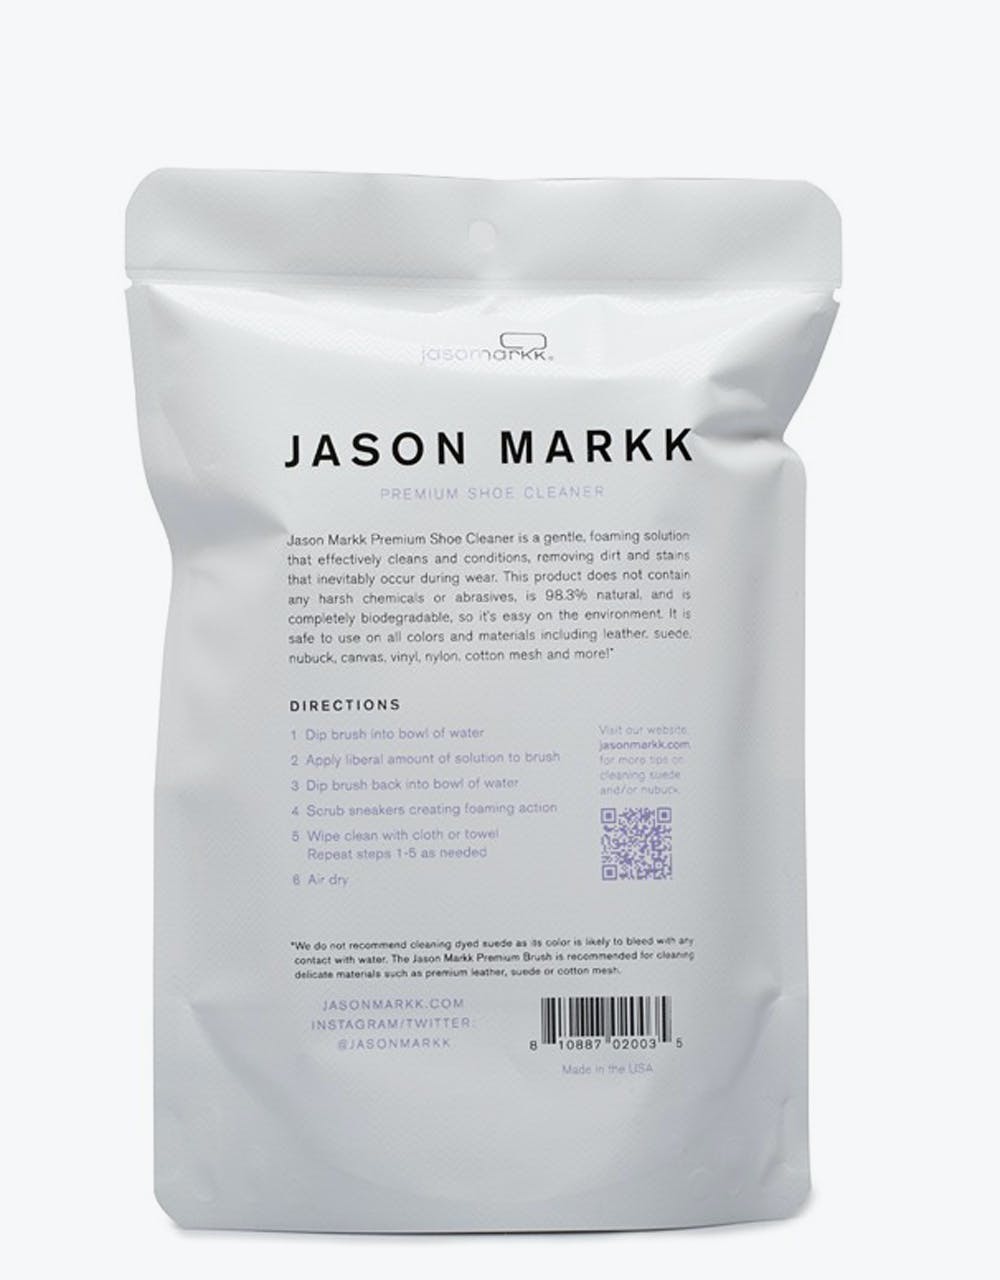 Jason Markk 4oz. Premium Shoe Cleaning Kit